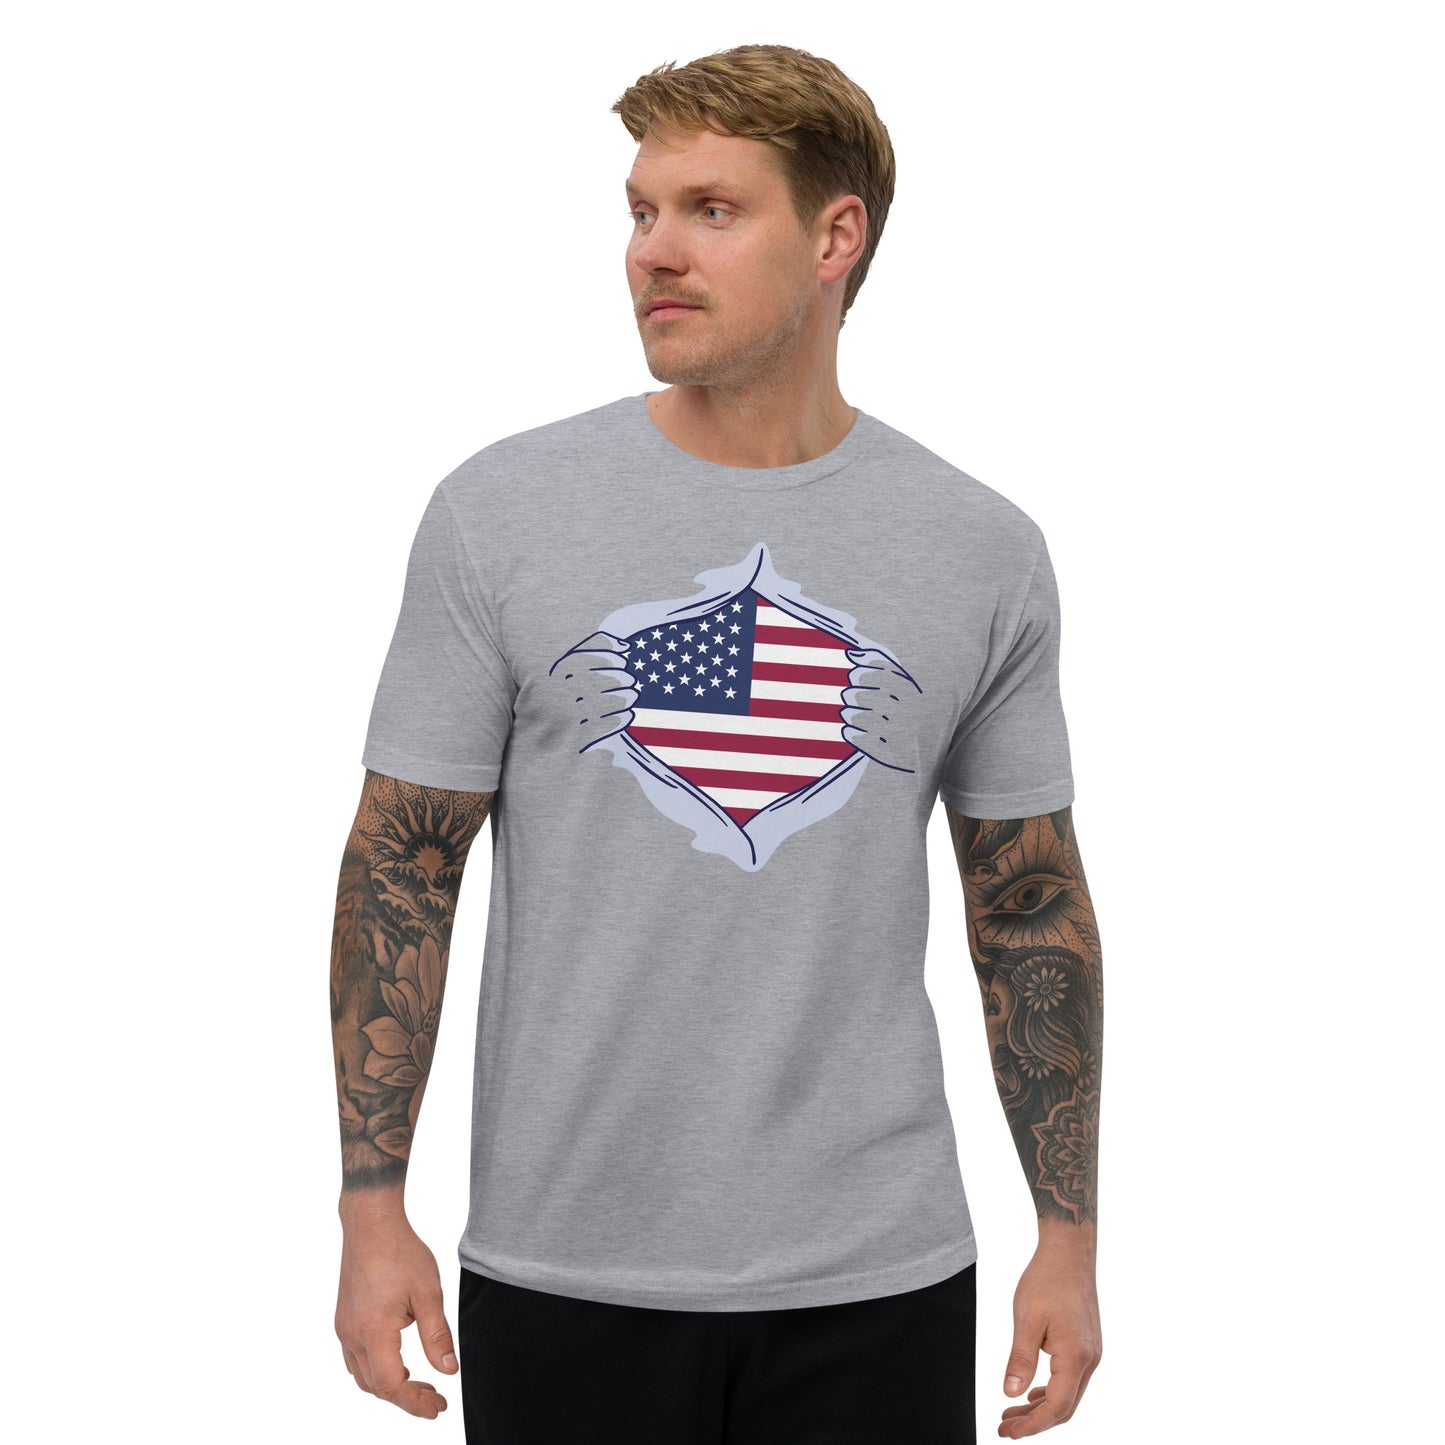 "USA" men's t-shirt